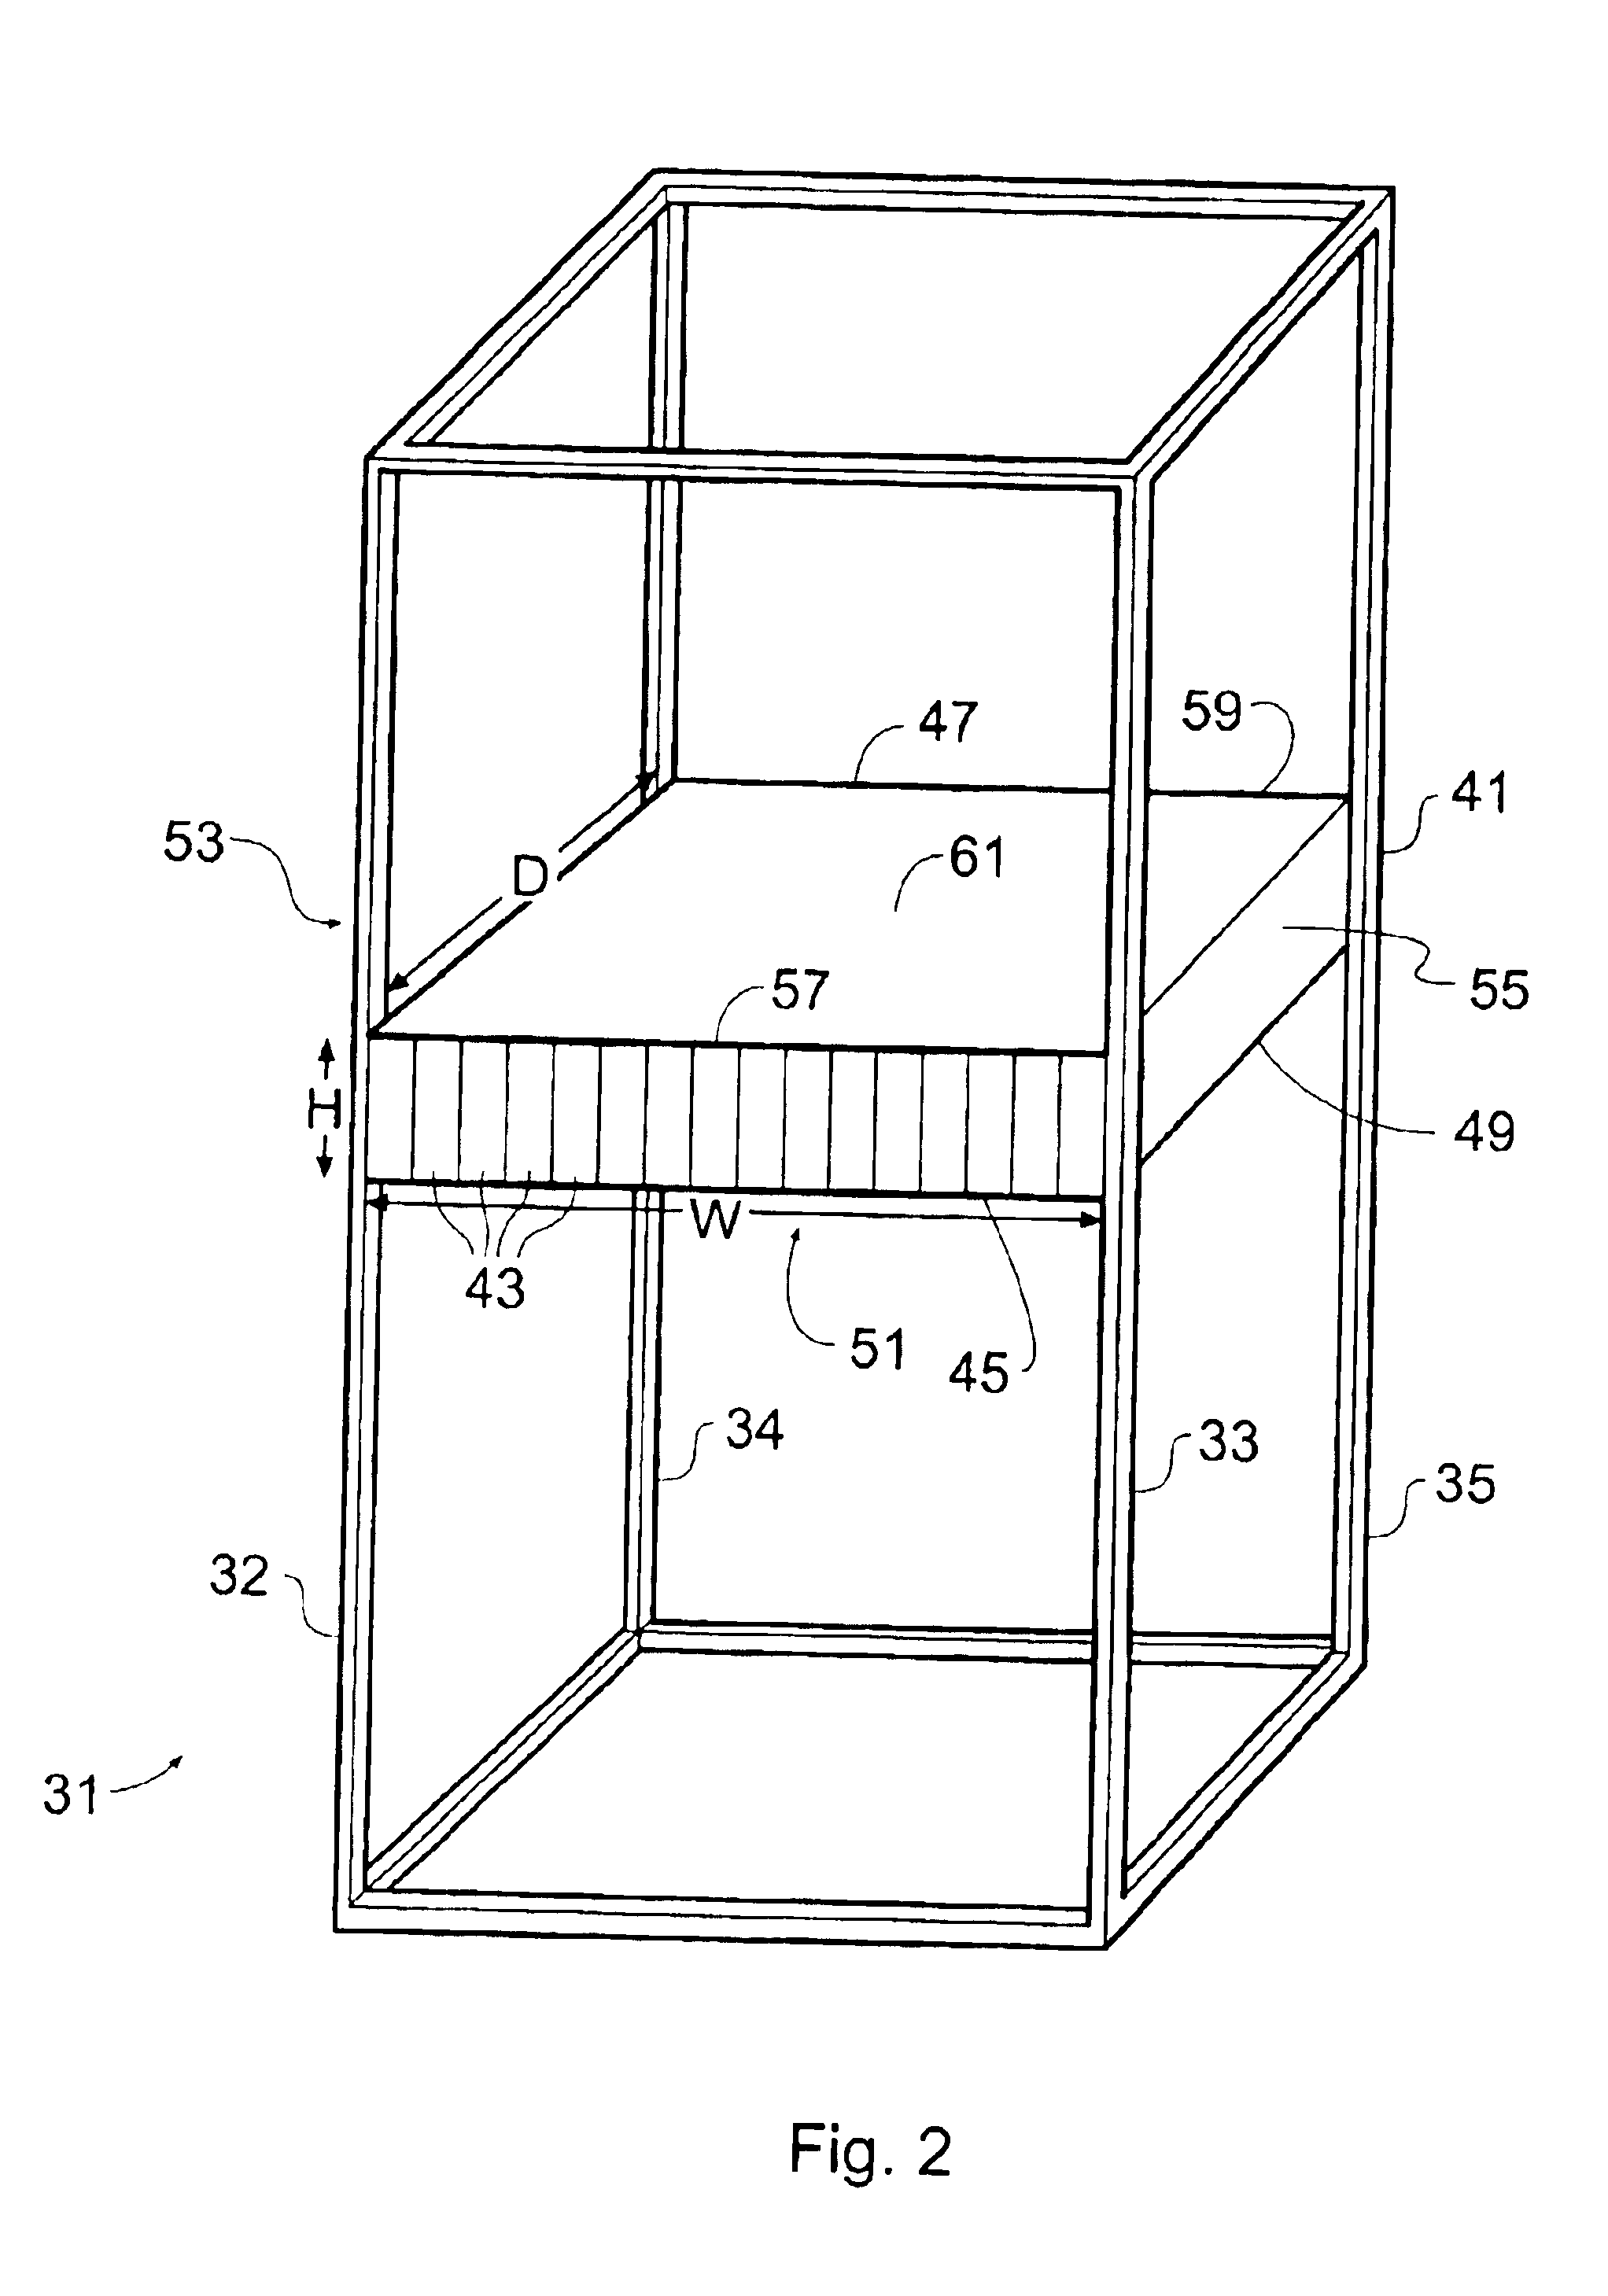 Computer module housing